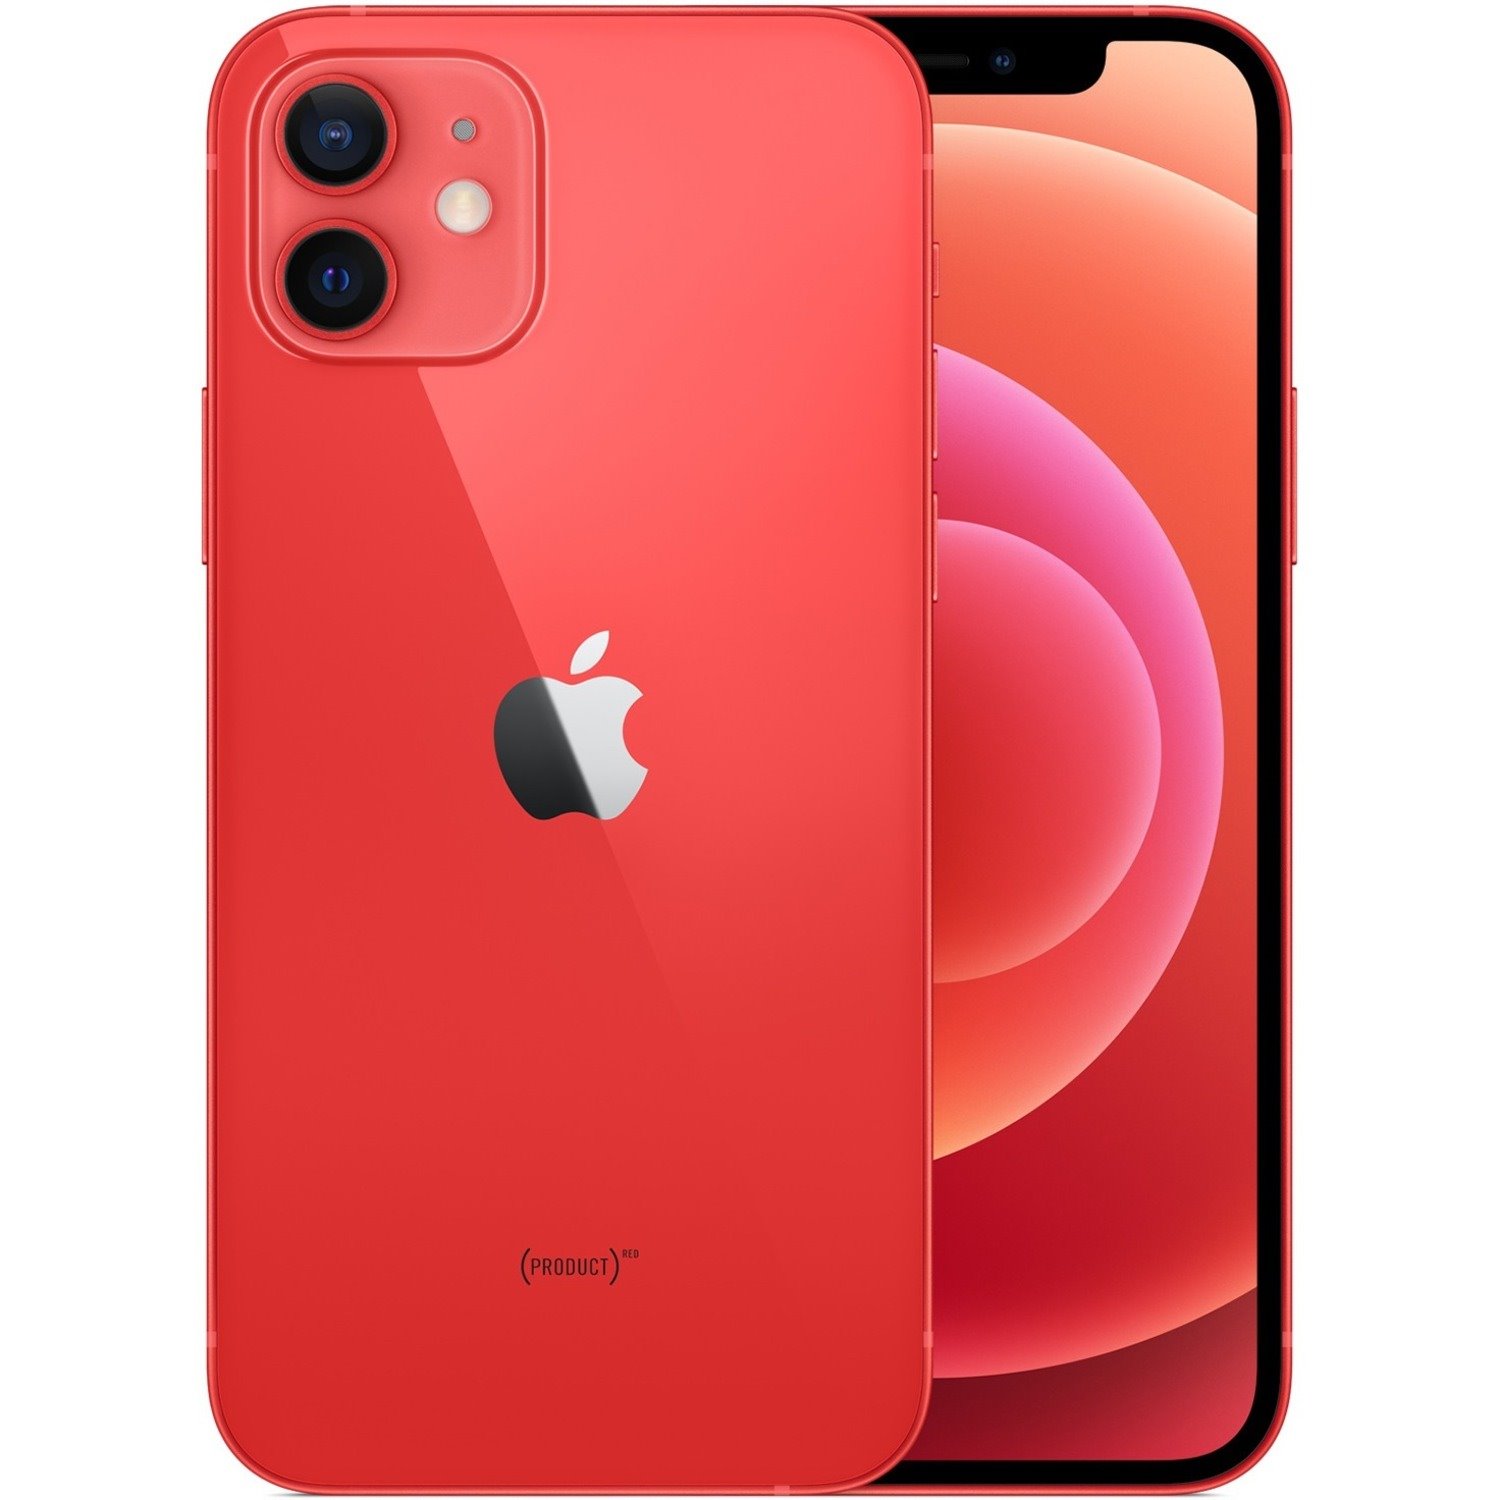 Apple iPhone 12 128 GB Smartphone - 15.5 cm (6.1") OLED Full HD Plus - Hexa-core (6 Core) - 4 GB RAM - iOS 14 - 5G - Red